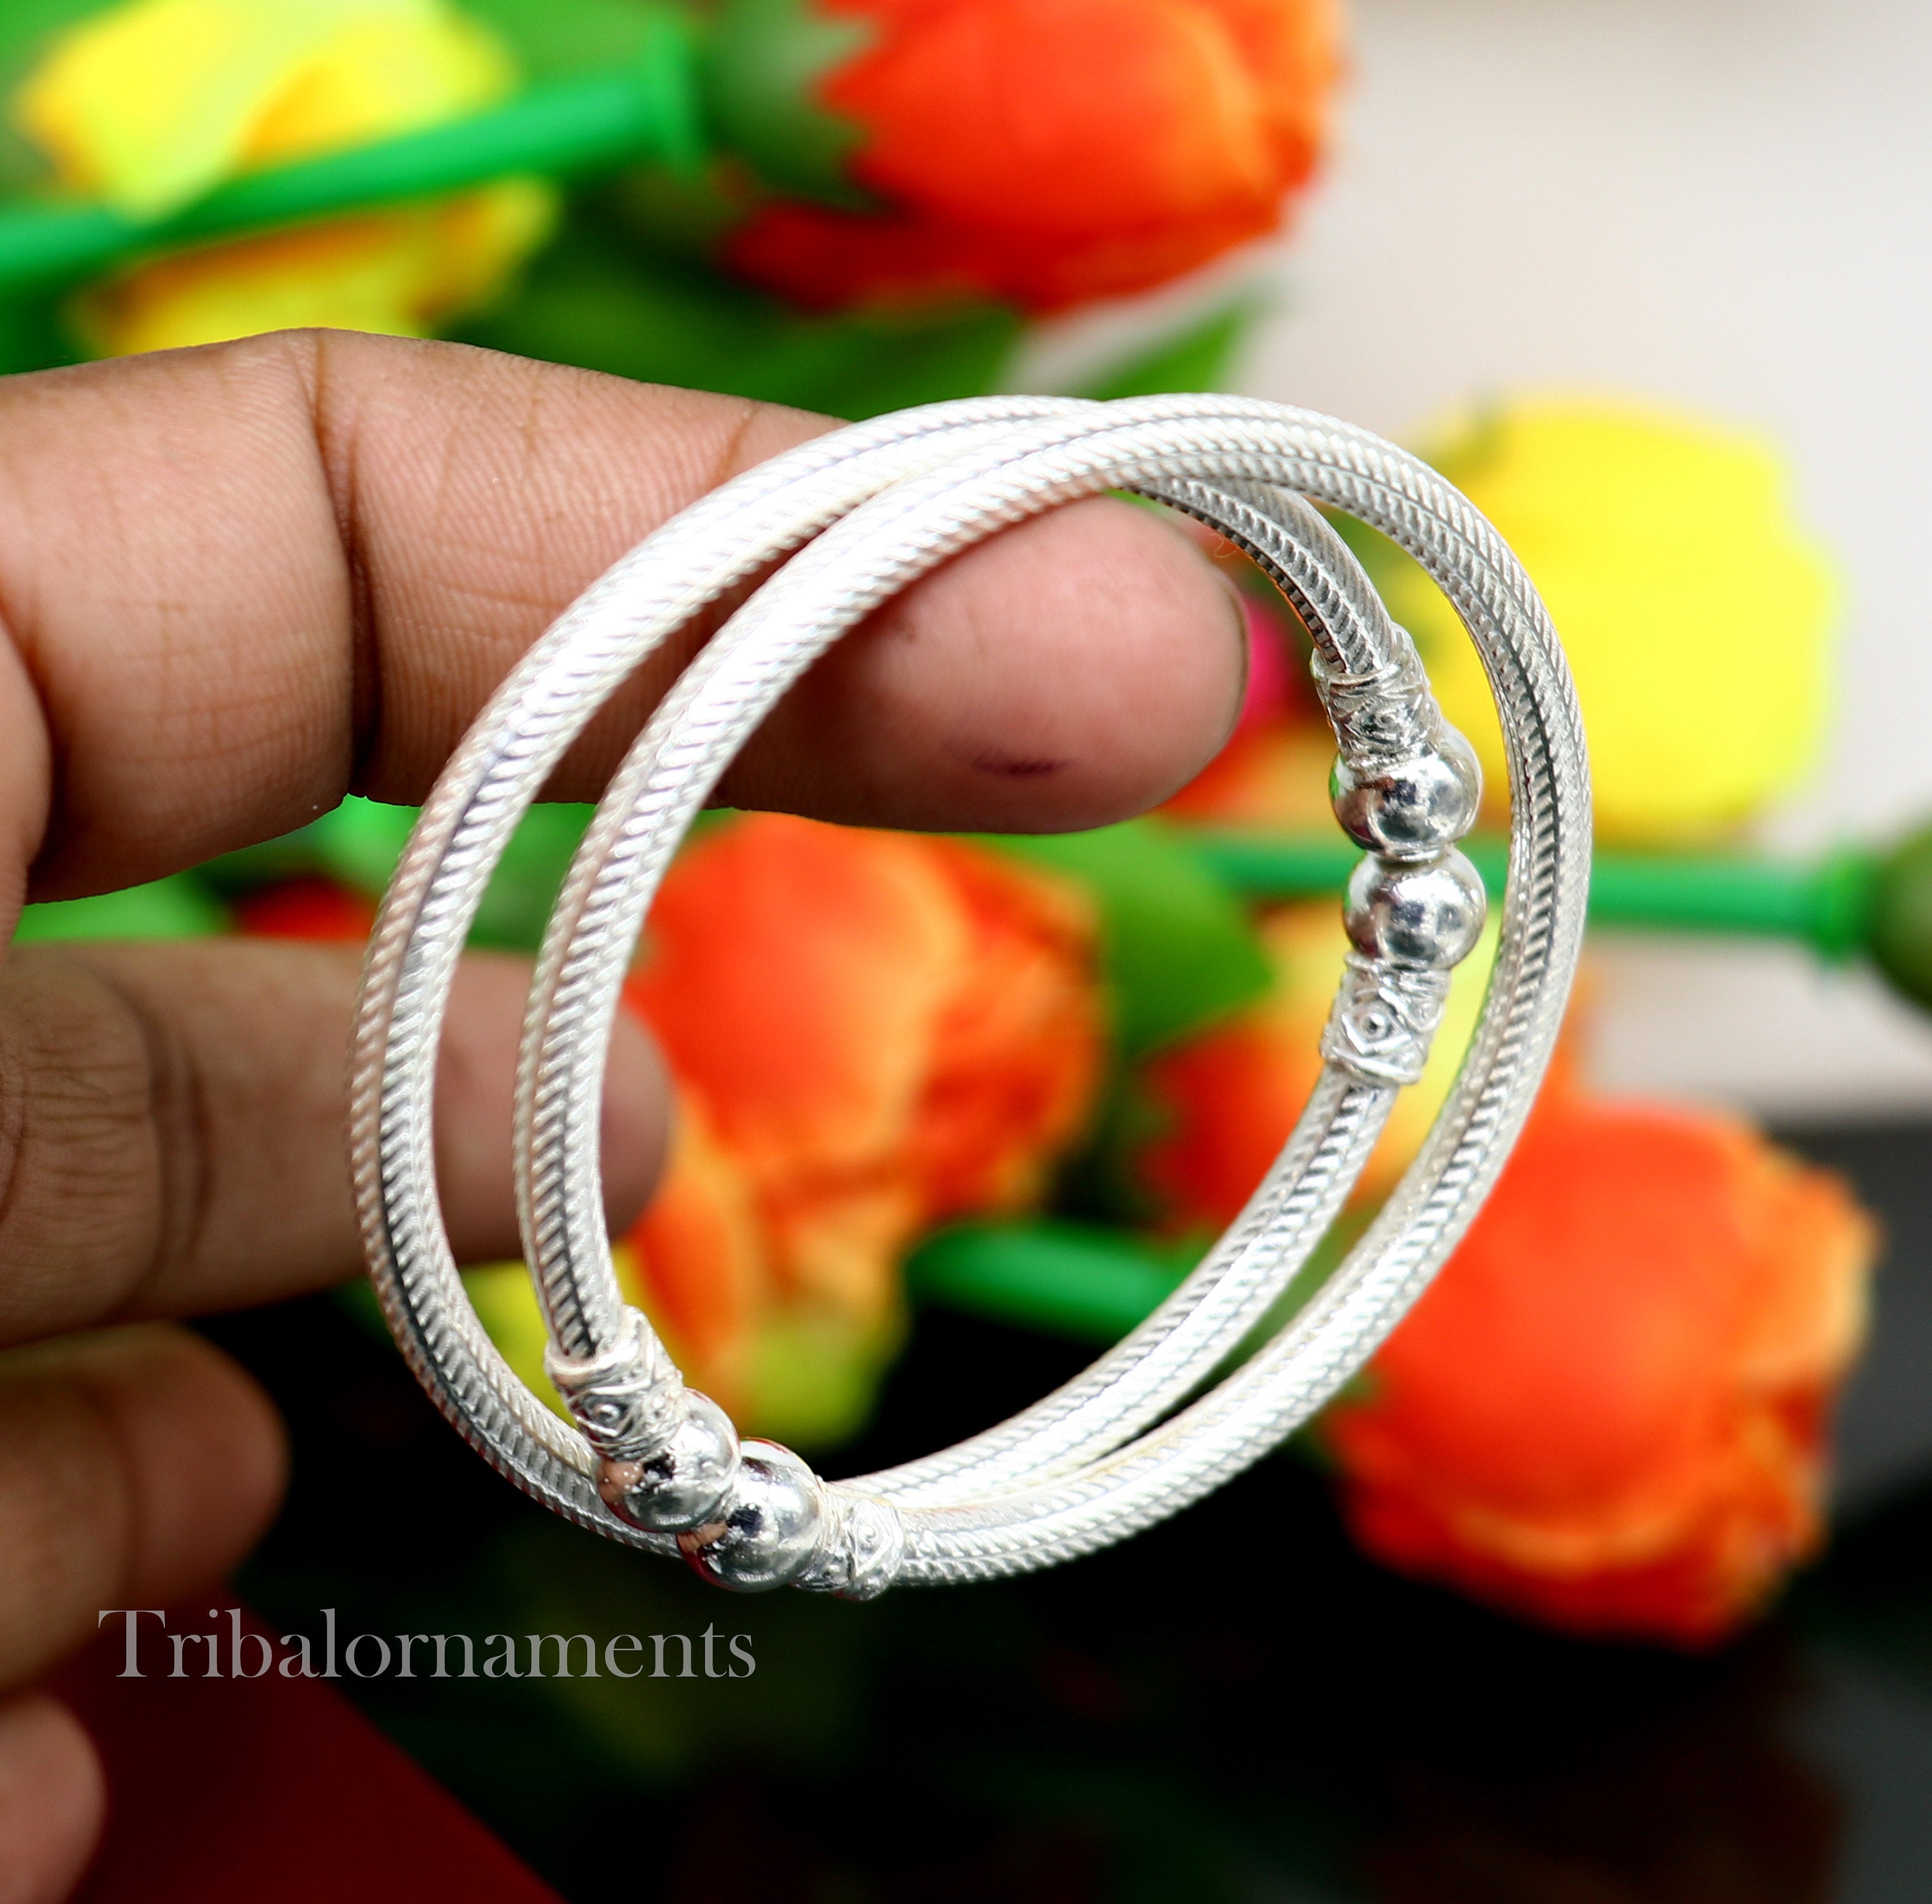 Amazing design Sterling silver bangle bracelet kangan chudi excellent  customized design bangle kada gift tribal kada jewelry nba220  TRIBAL  ORNAMENTS